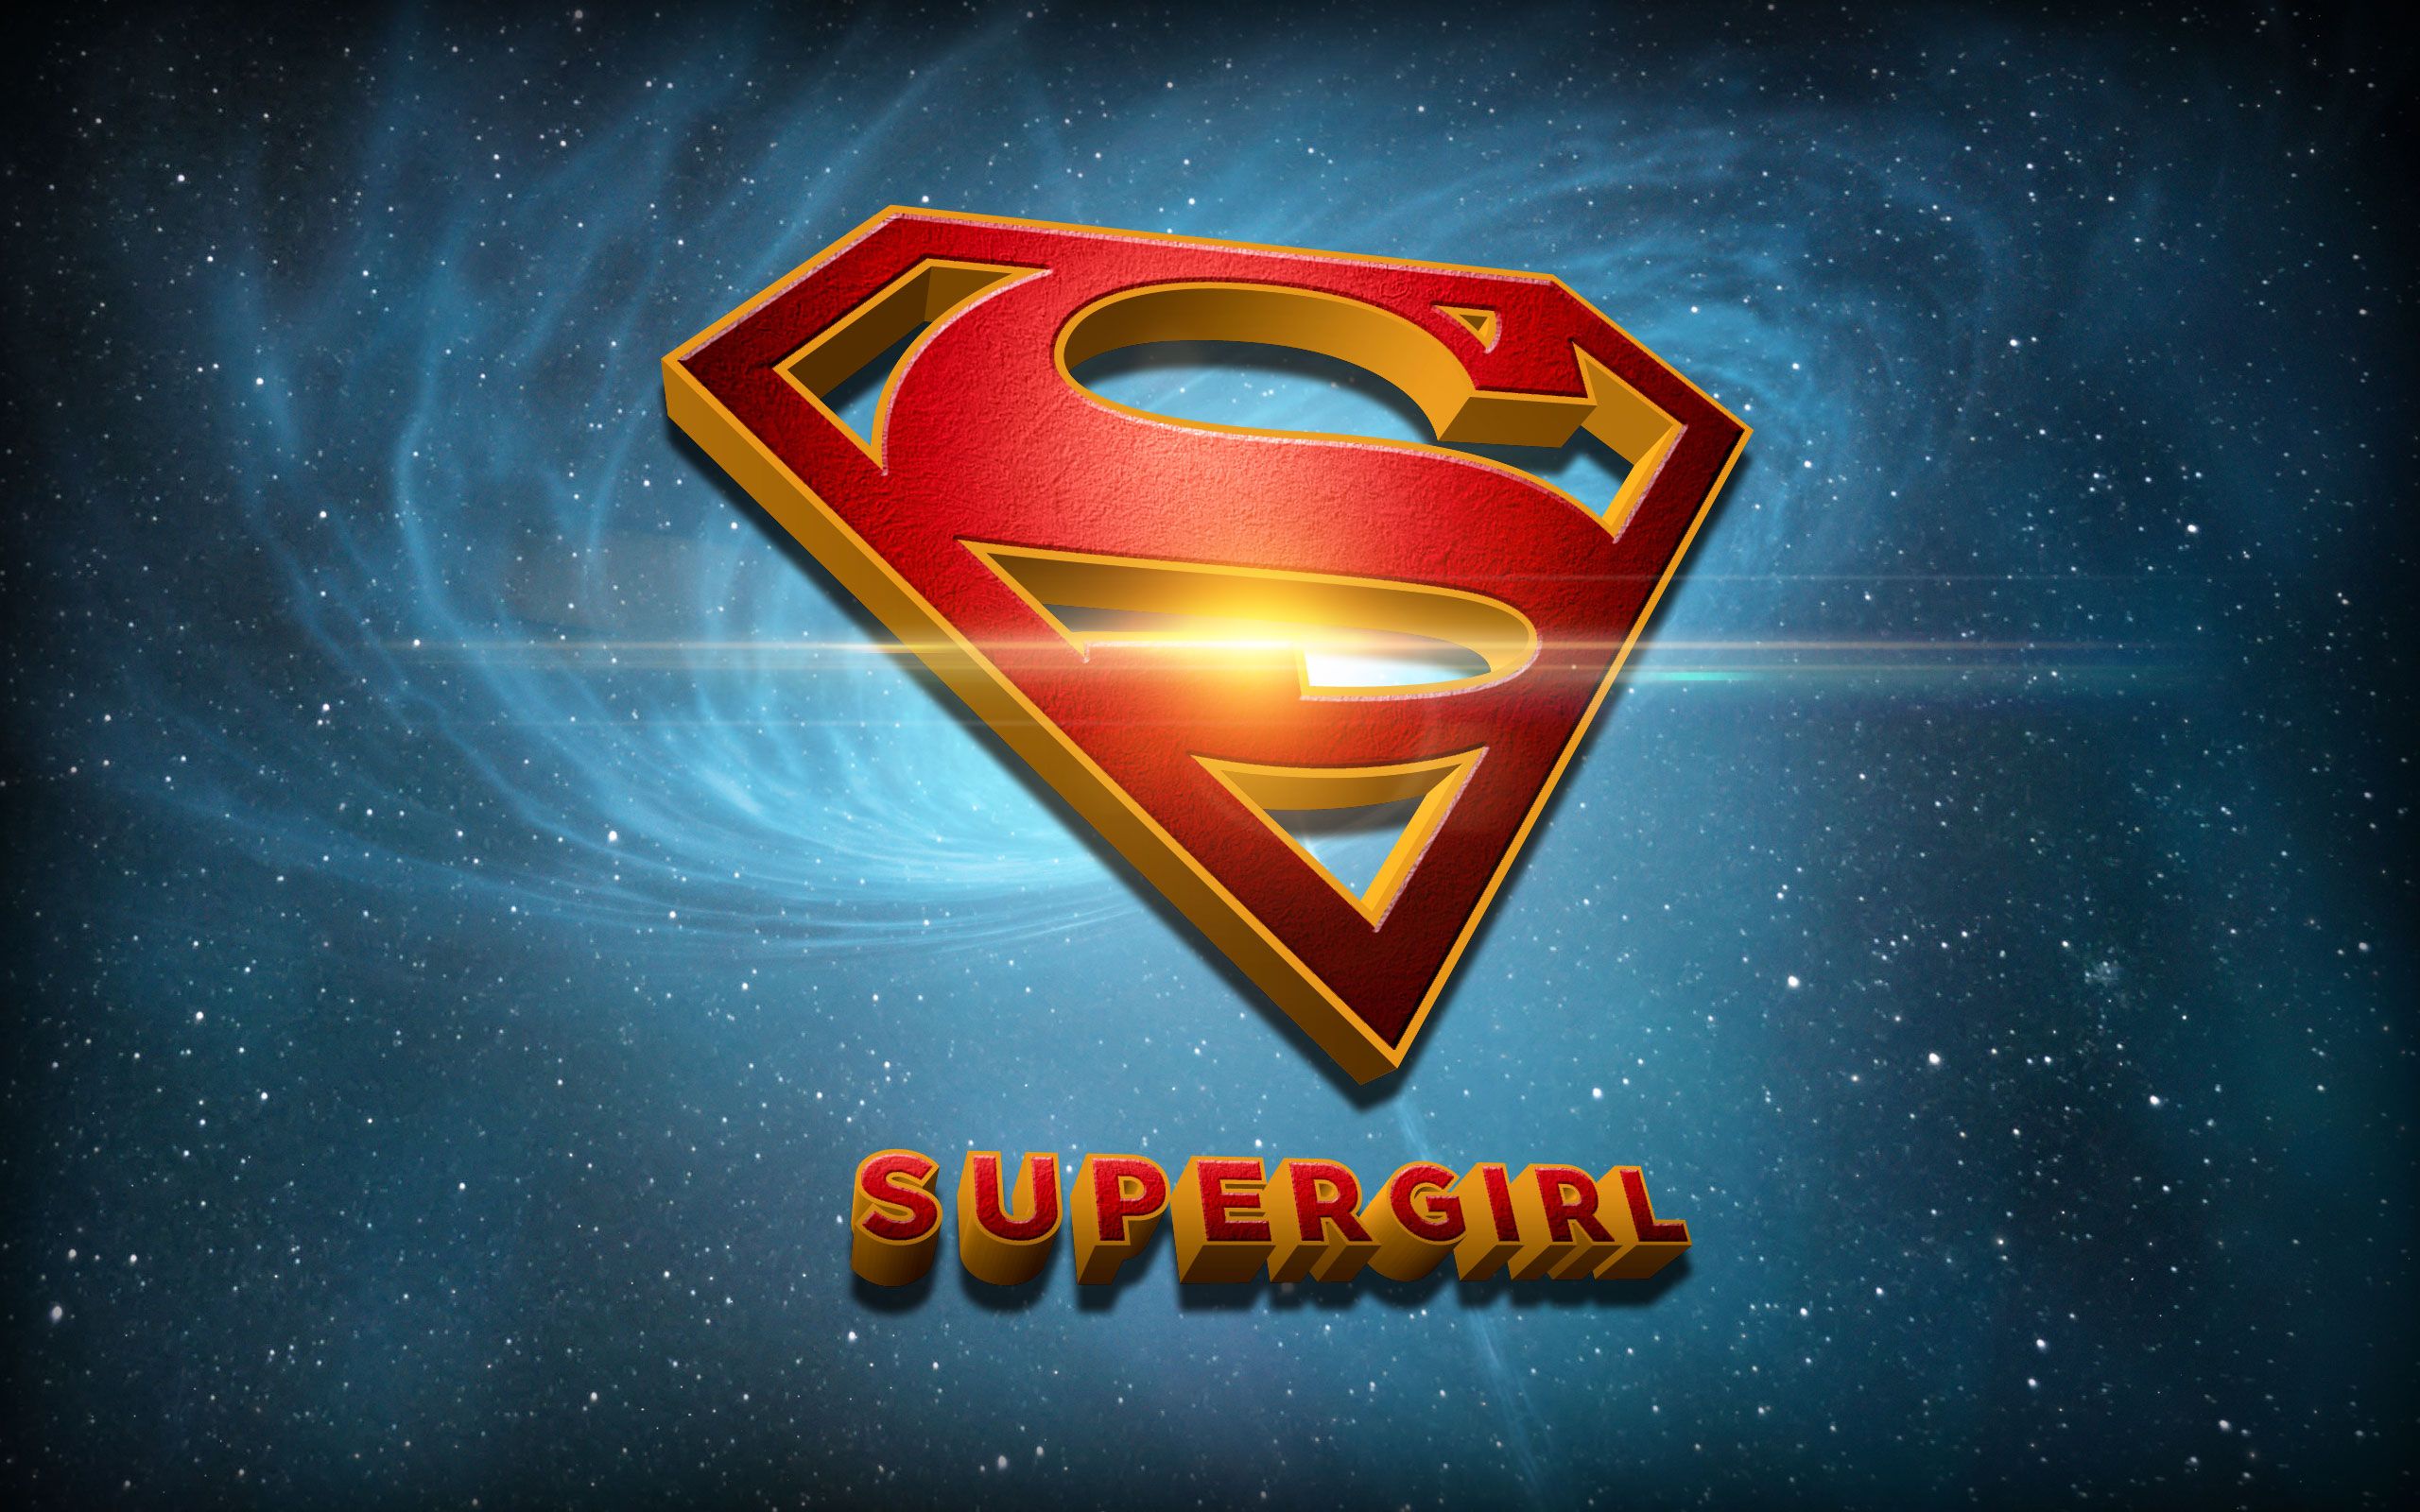 Supergirl HD Wallpaper. Supergirl, Supergirl wallpaper, Supergirl picture